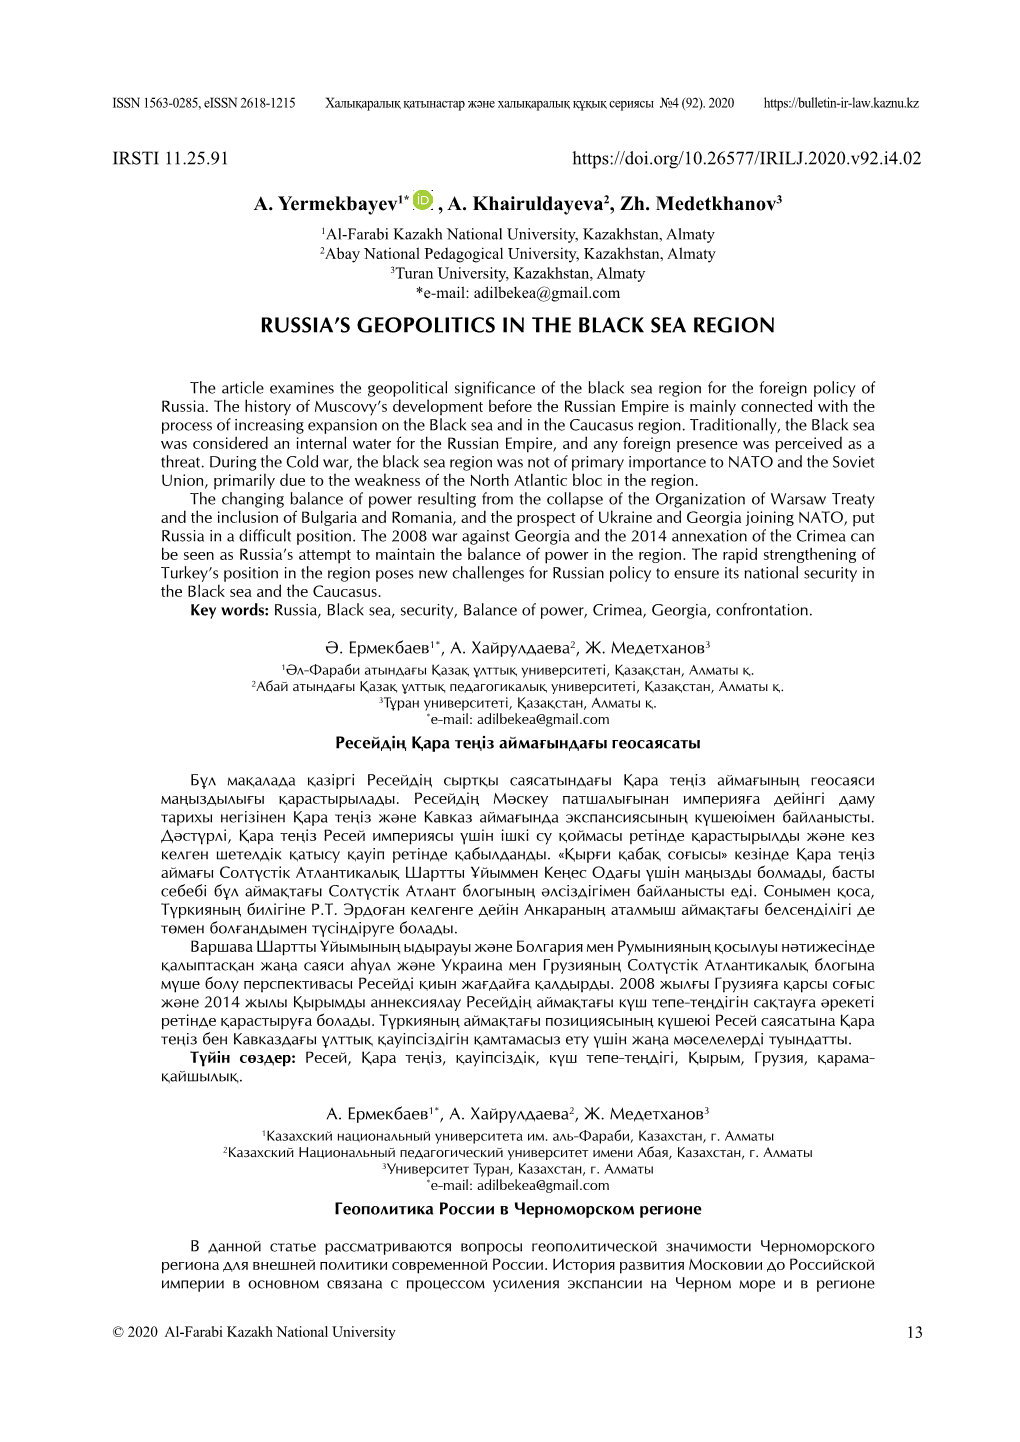 А. Yermekbayev1* , A. Khairuldayeva2, Zh. Medetkhanov3 RUSSIA's GEOPOLITICS in the BLACK SEA REGION